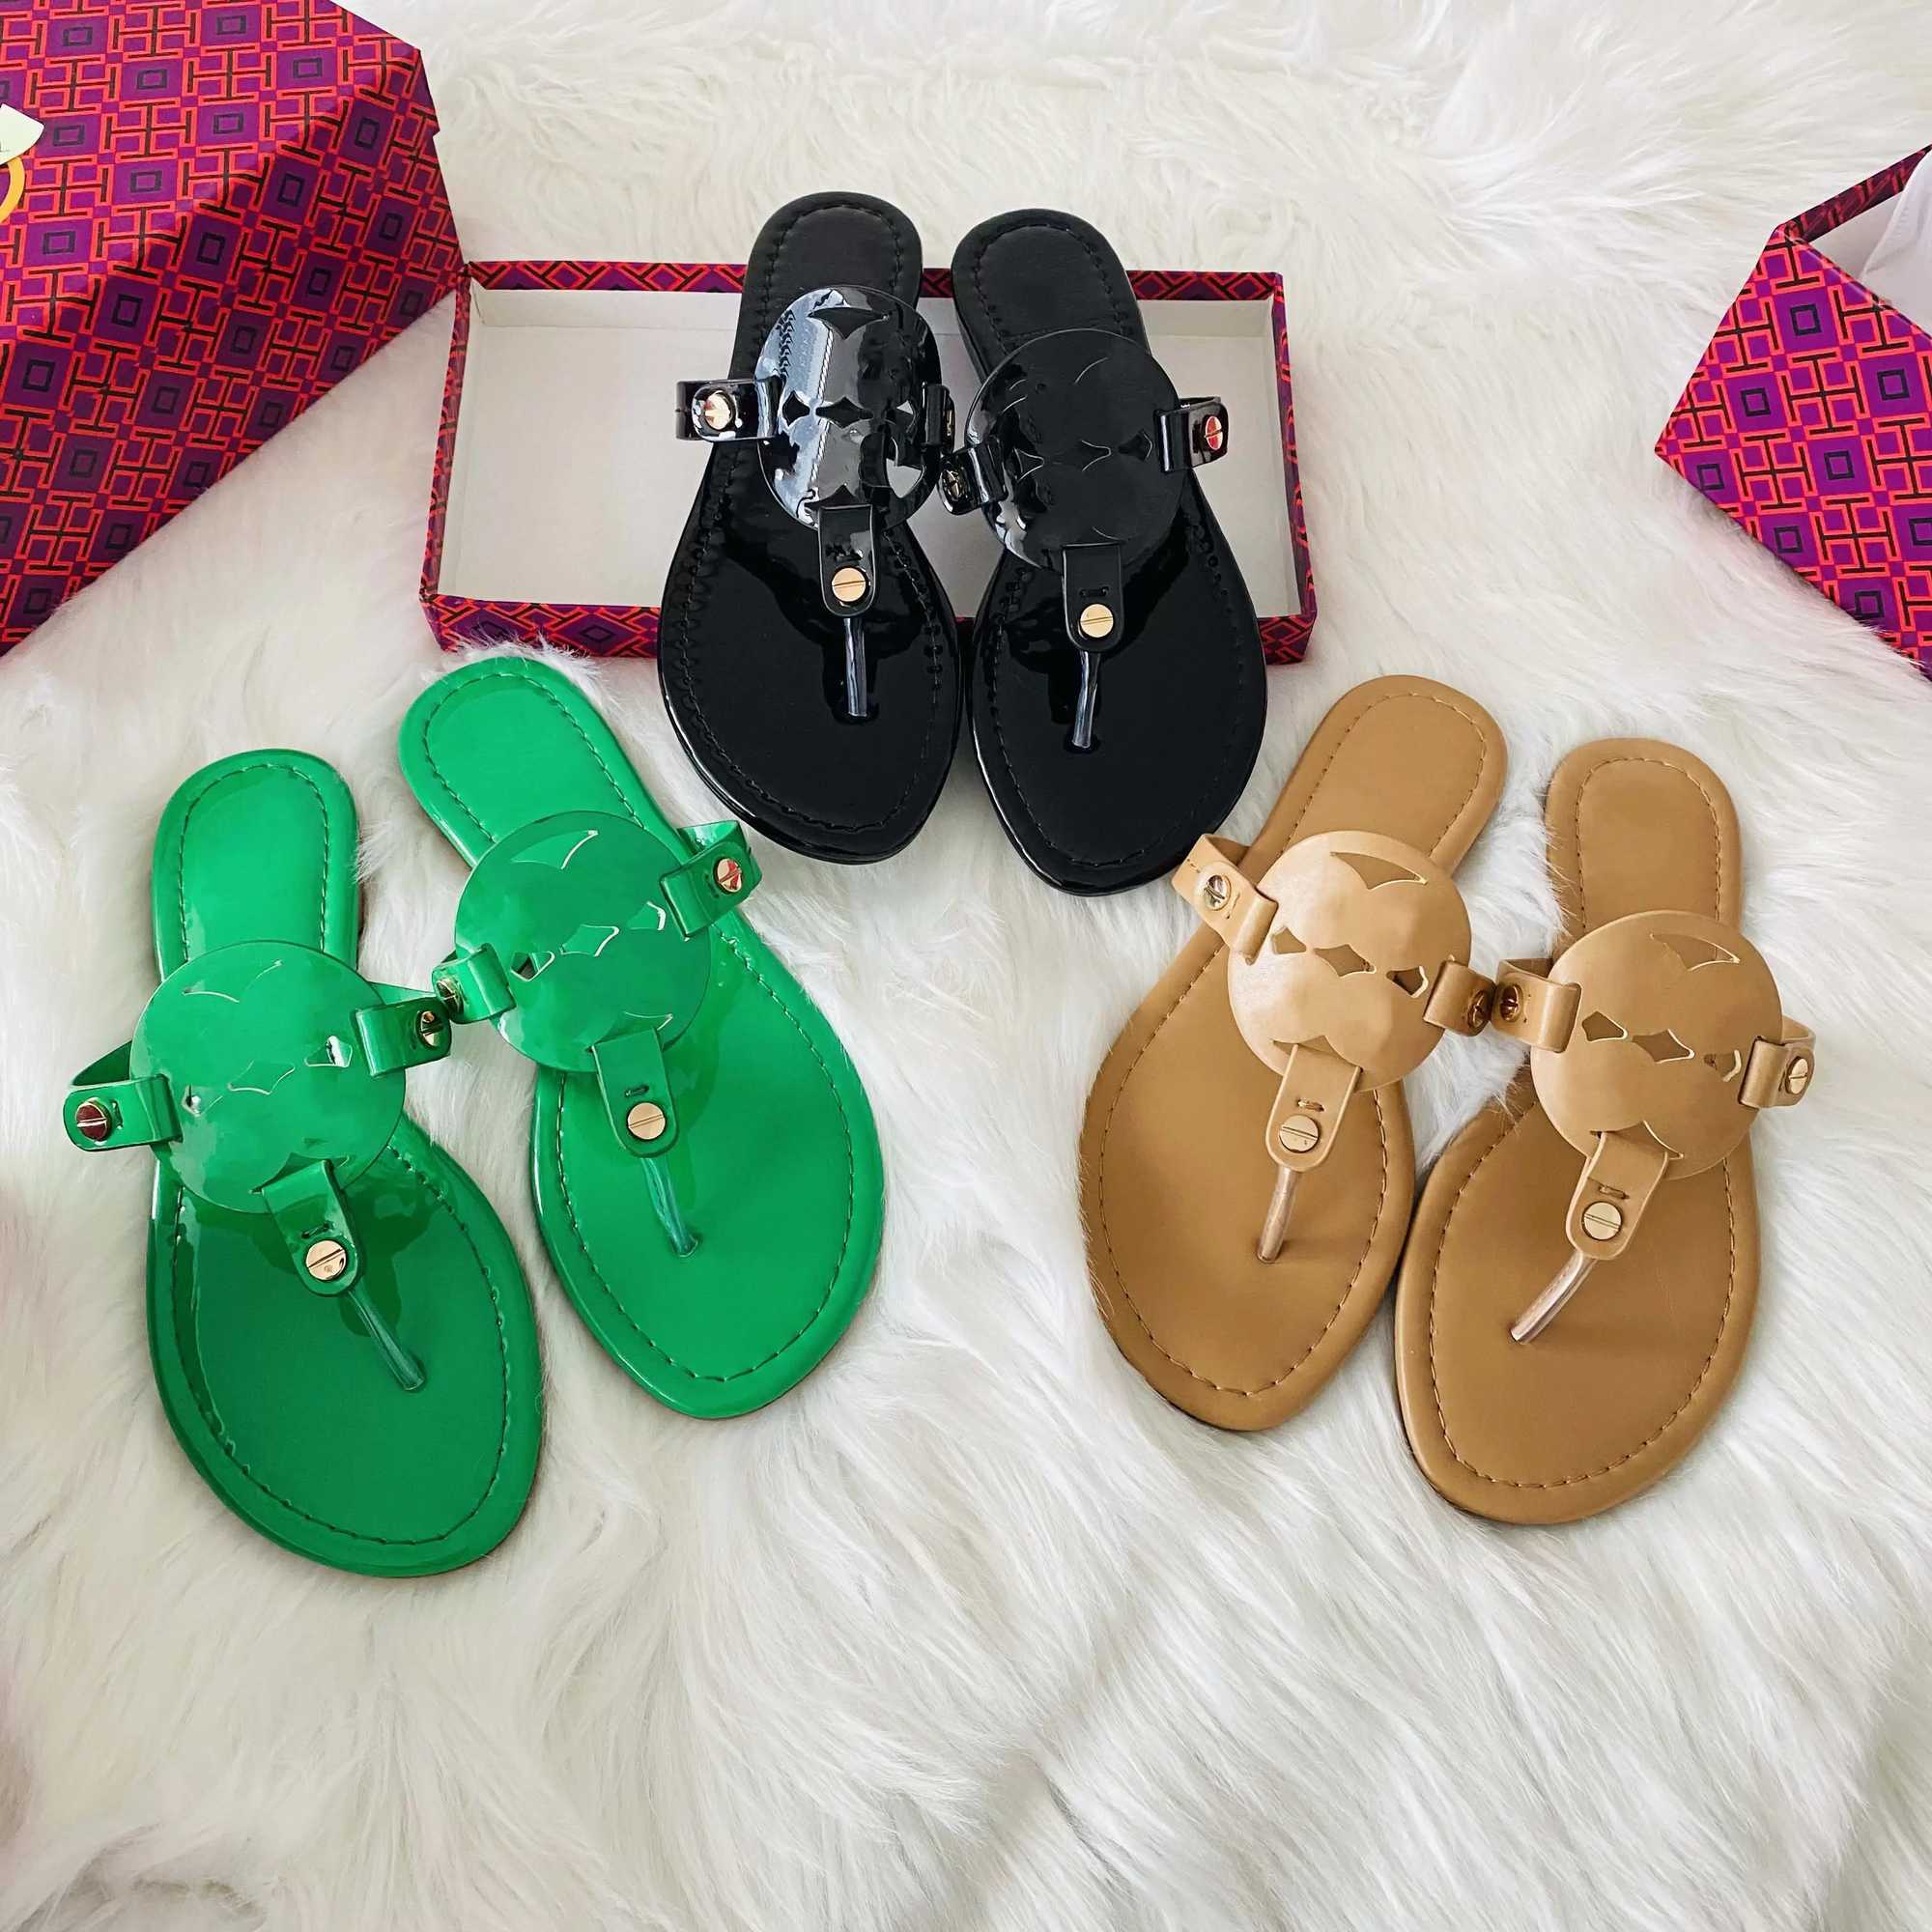 

Luxury Brand Sandals Designer Slippers Slides Floral Brocade Genuine Leather Flip Flops Women Shoes Sandal without box by shoe10 20, #1